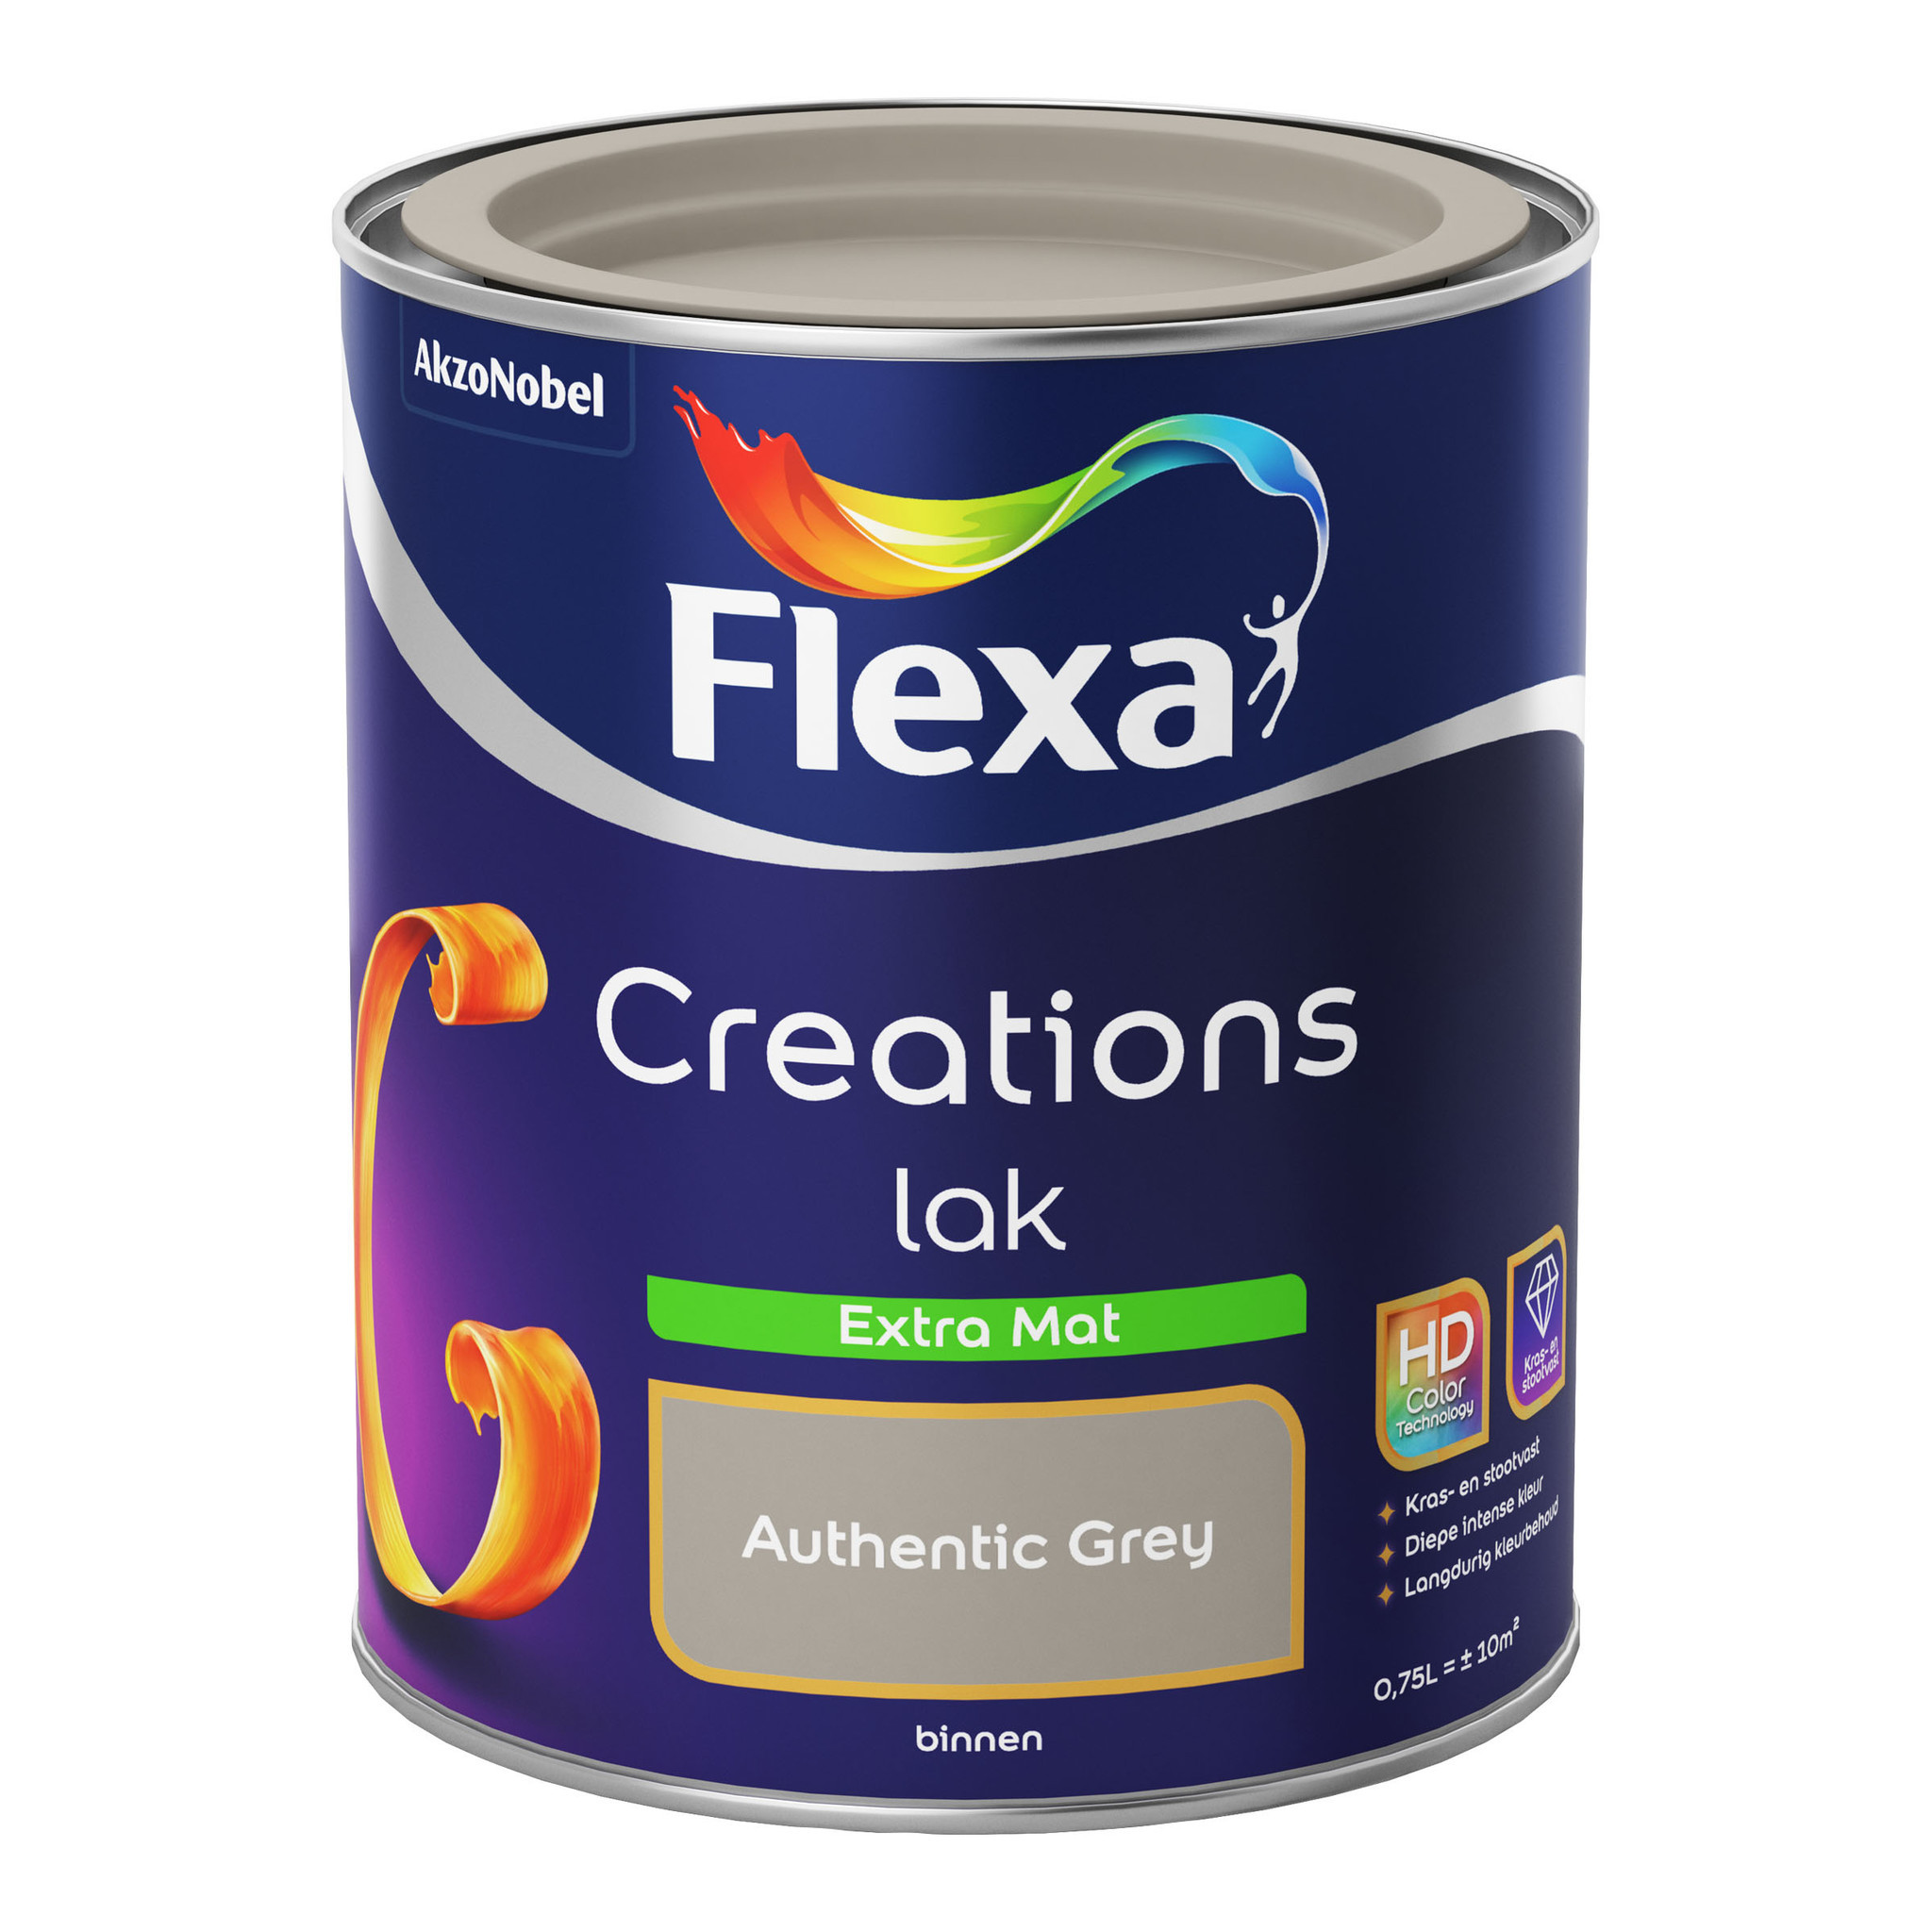 Flexa Creations Lak Extra Mat - Authentic Grey